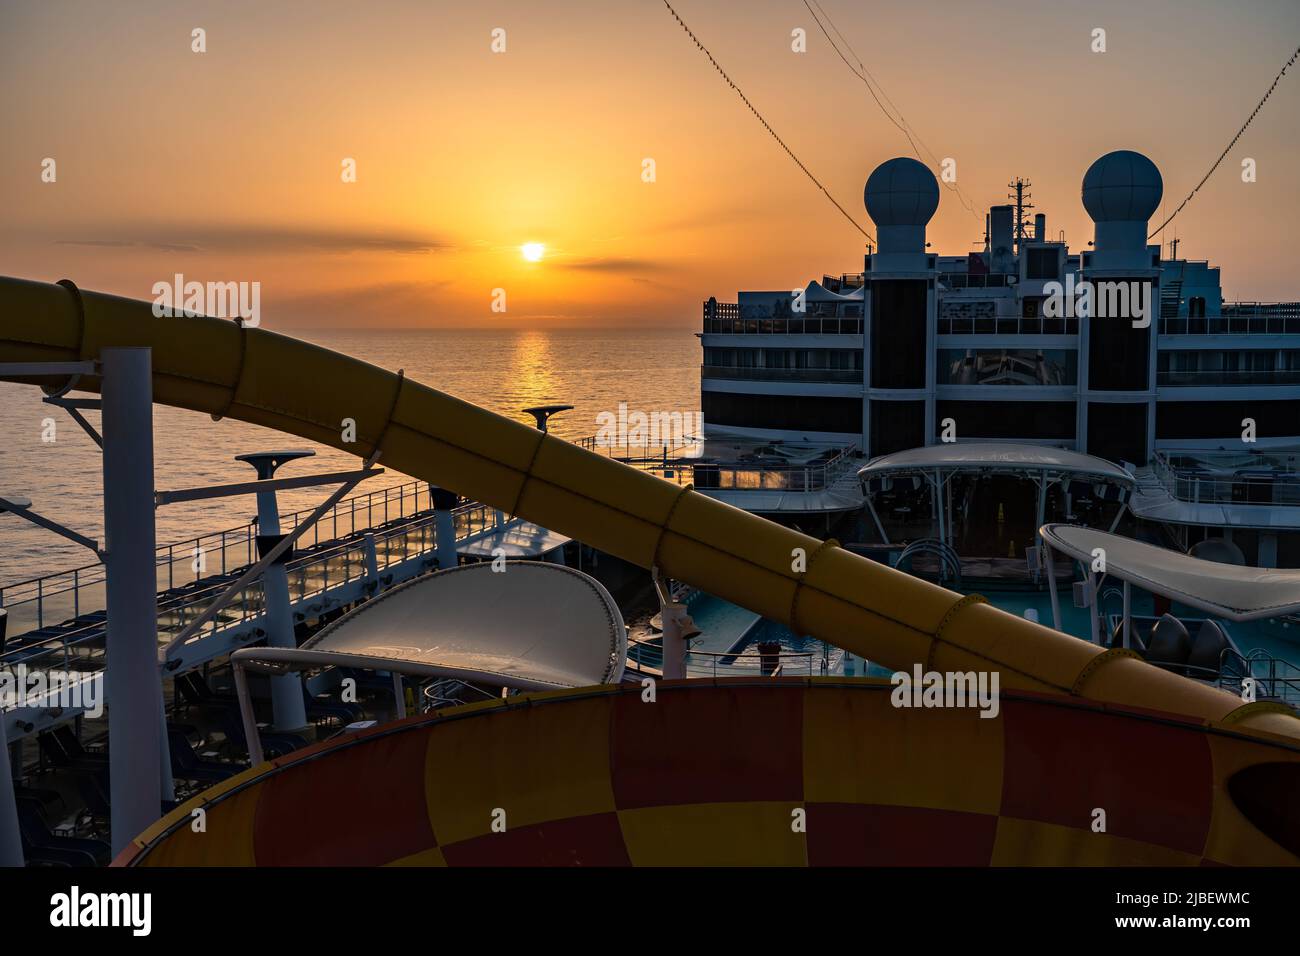 Sunrise in the Mediterranean on the Norwegian Epic cruise ship Stock Photo